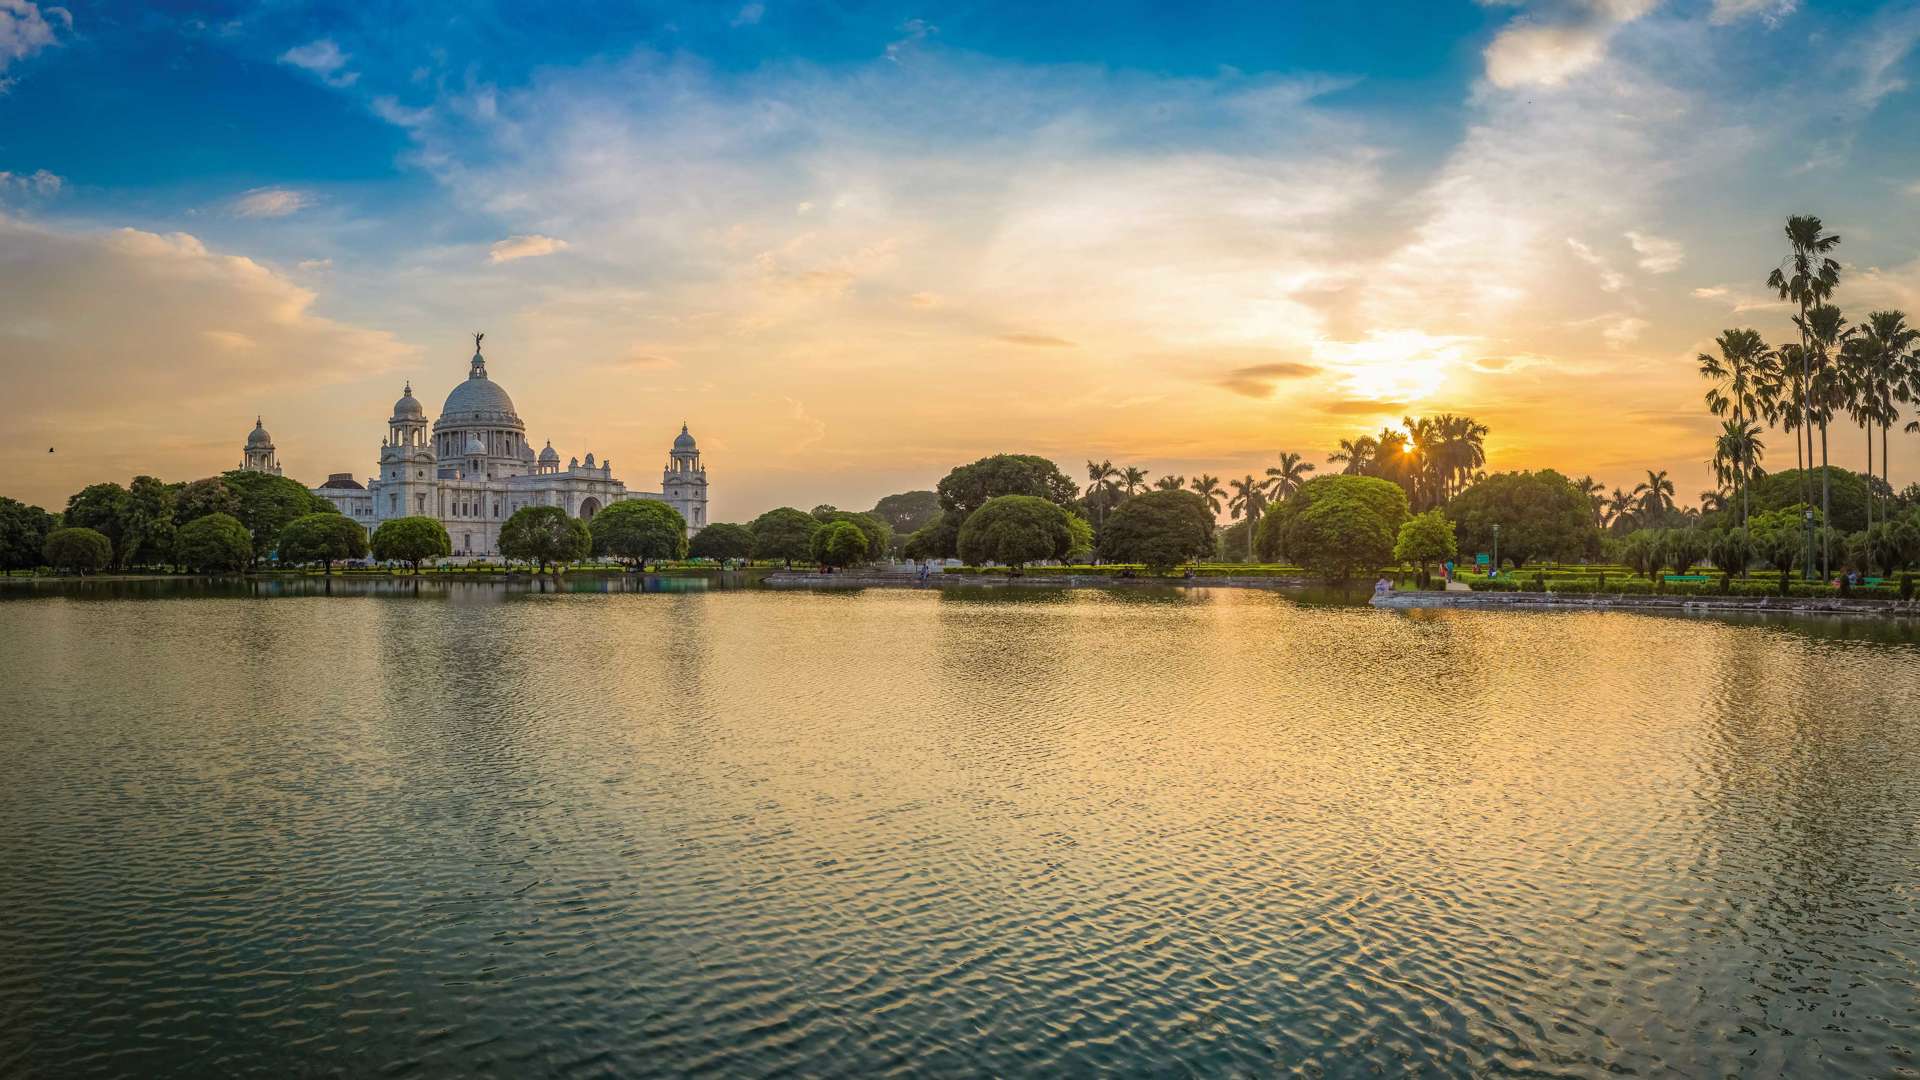 Victoria Memorial, Kolkata, India 